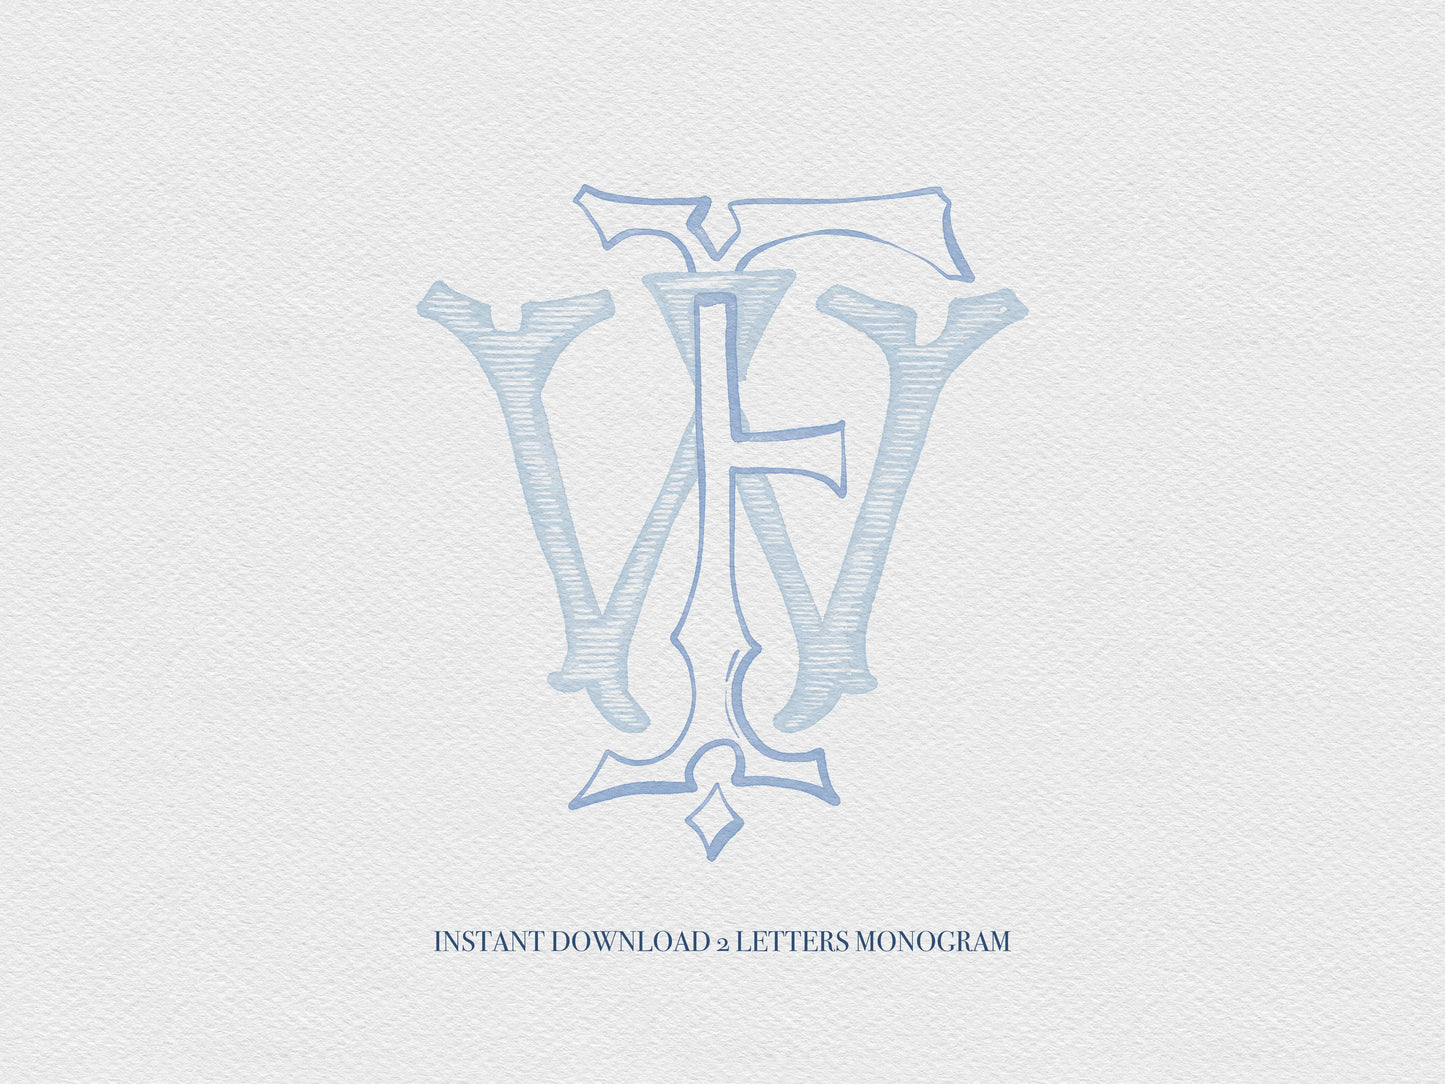 2 Letter Monogram with Letters WF | Digital Download - Wedding Monogram SVG, Personal Logo, Wedding Logo for Wedding Invitations The Wedding Crest Lab